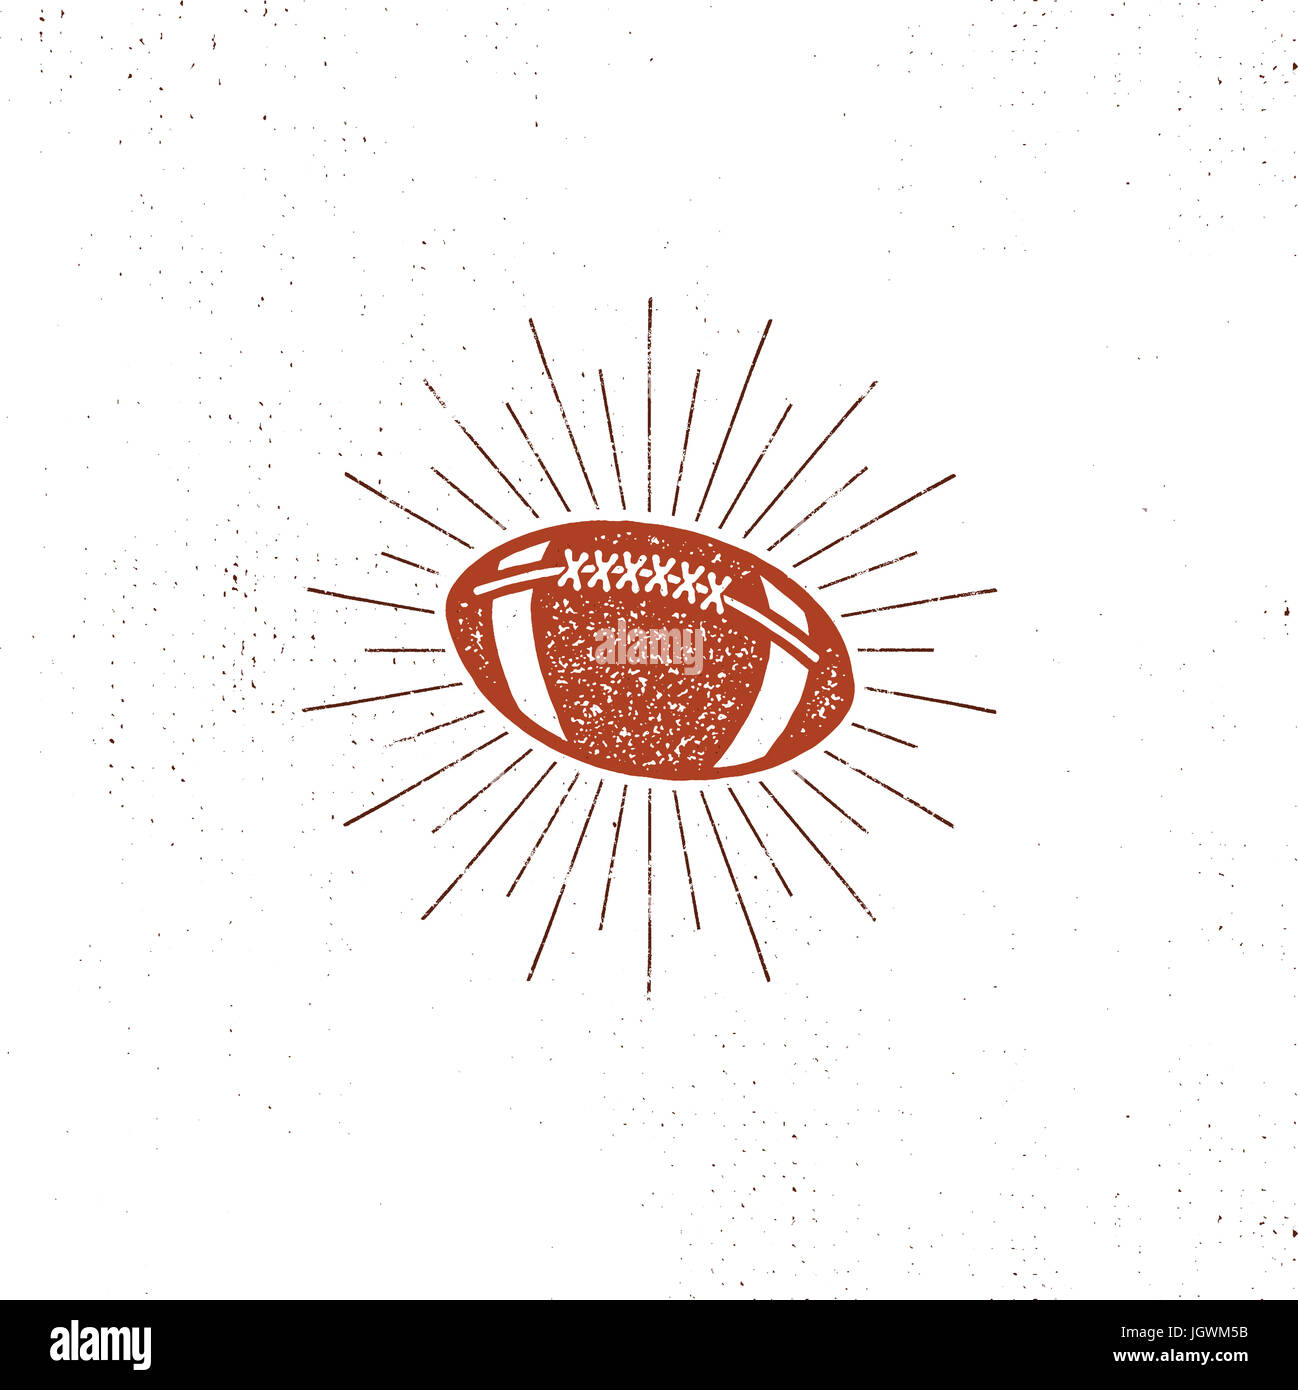 american football bal illustration, icon. Retro design. Usa sports pictogram with sunbursts isolated on white background. vintage style Stock Photo